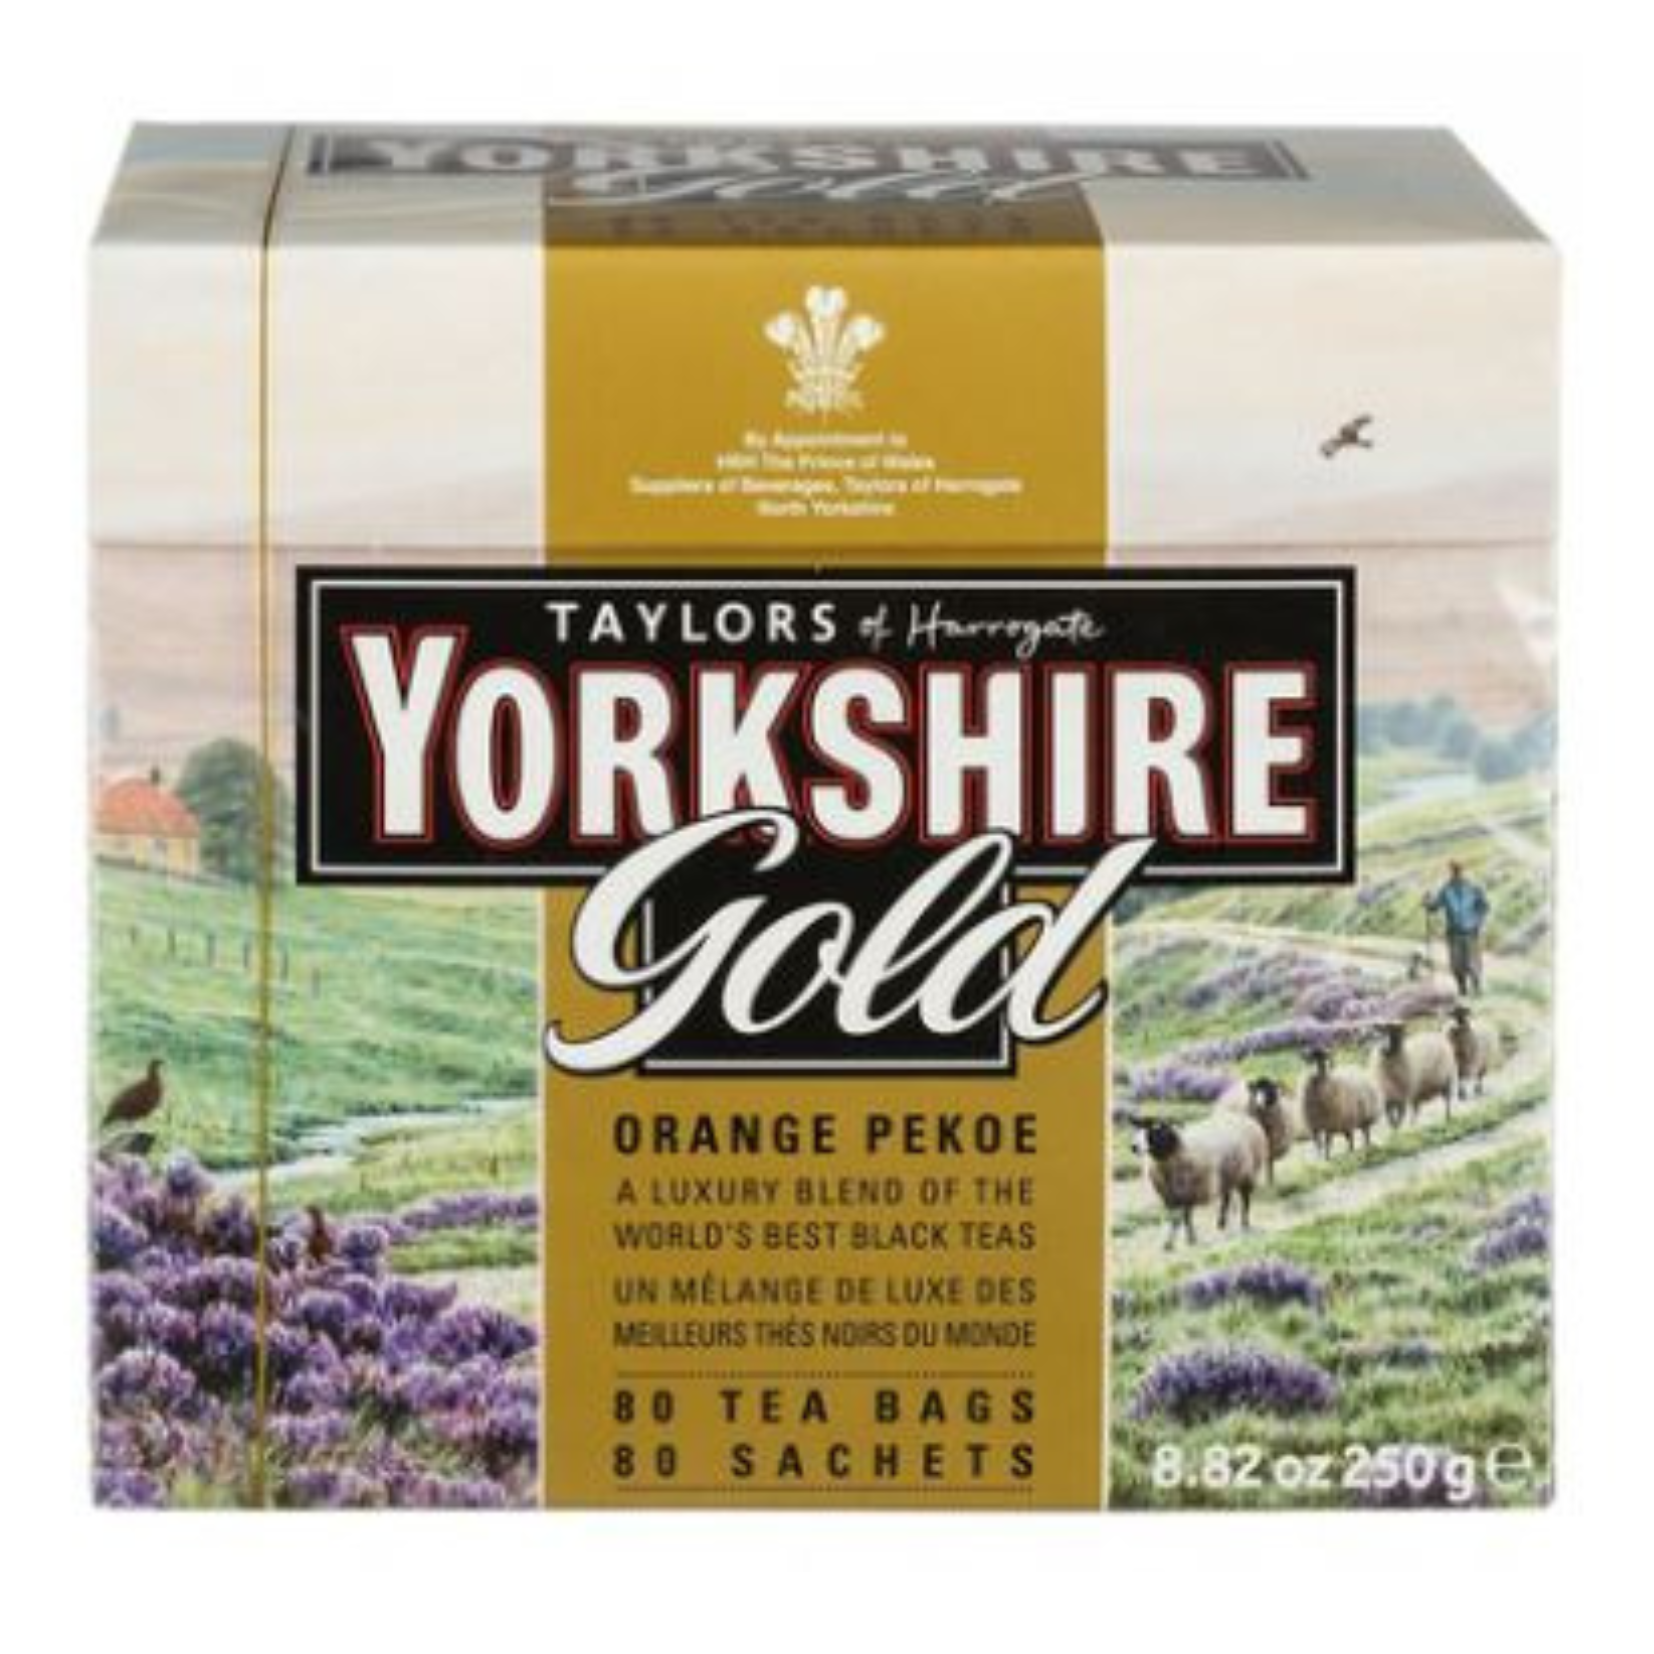 Yorkshire Gold Orange Pekoe Tea 80ct